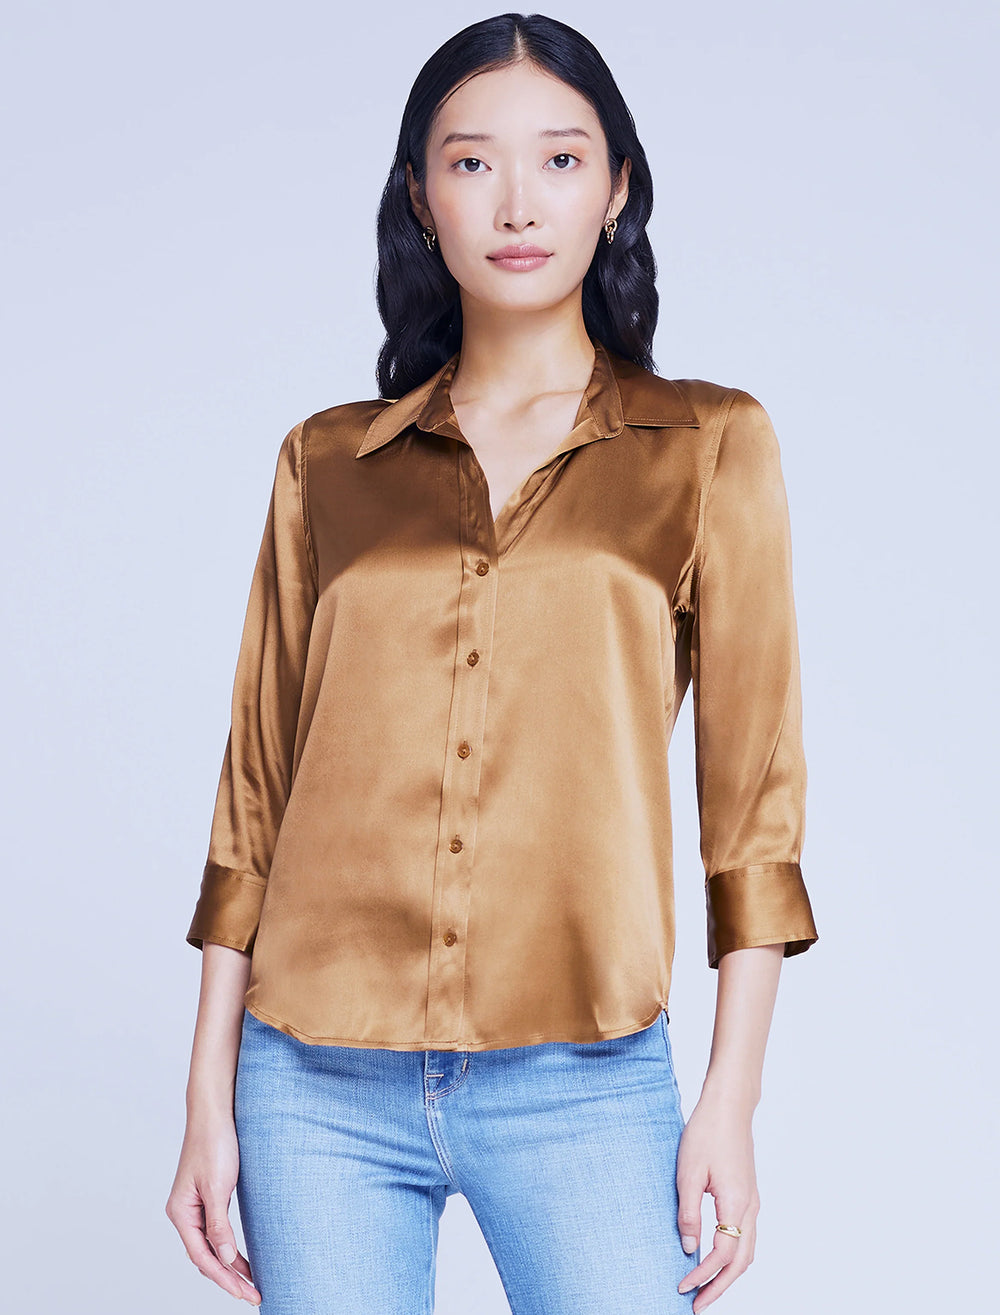 Model wearing L'agence's dani shirt in biscotti.